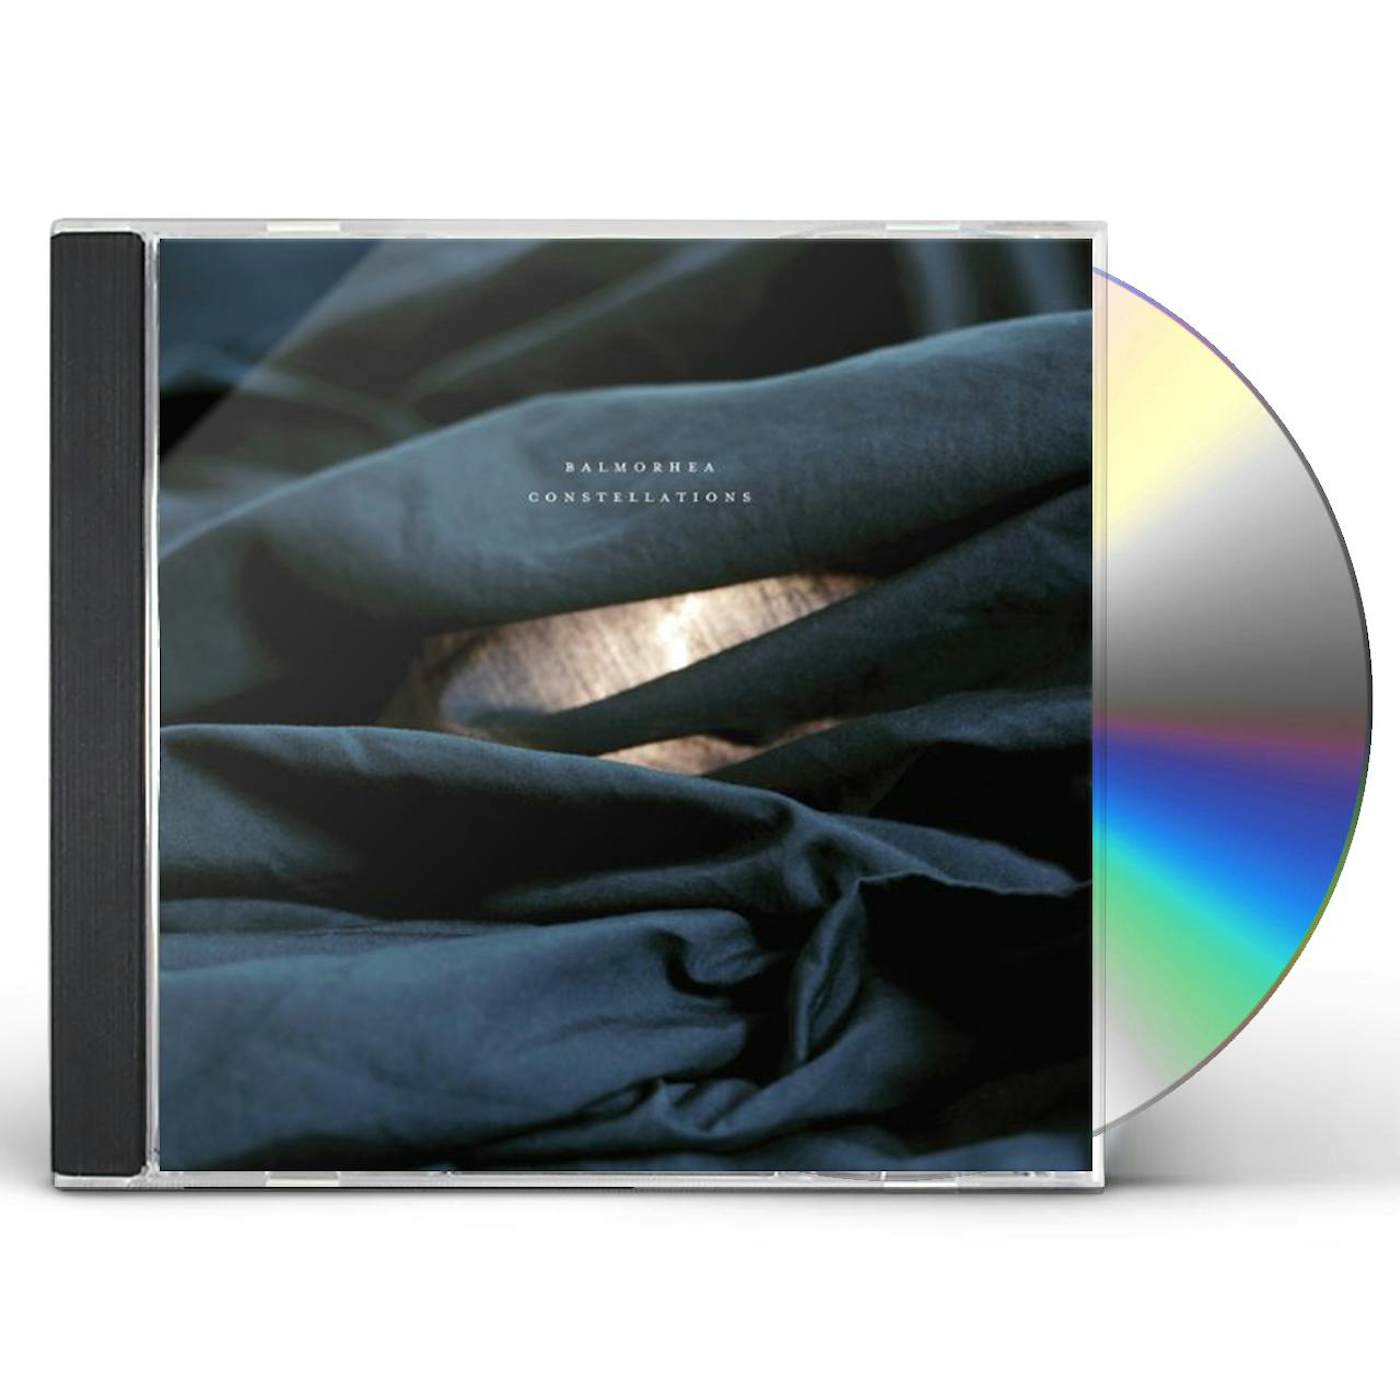 Balmorhea CONSTELLATIONS CD